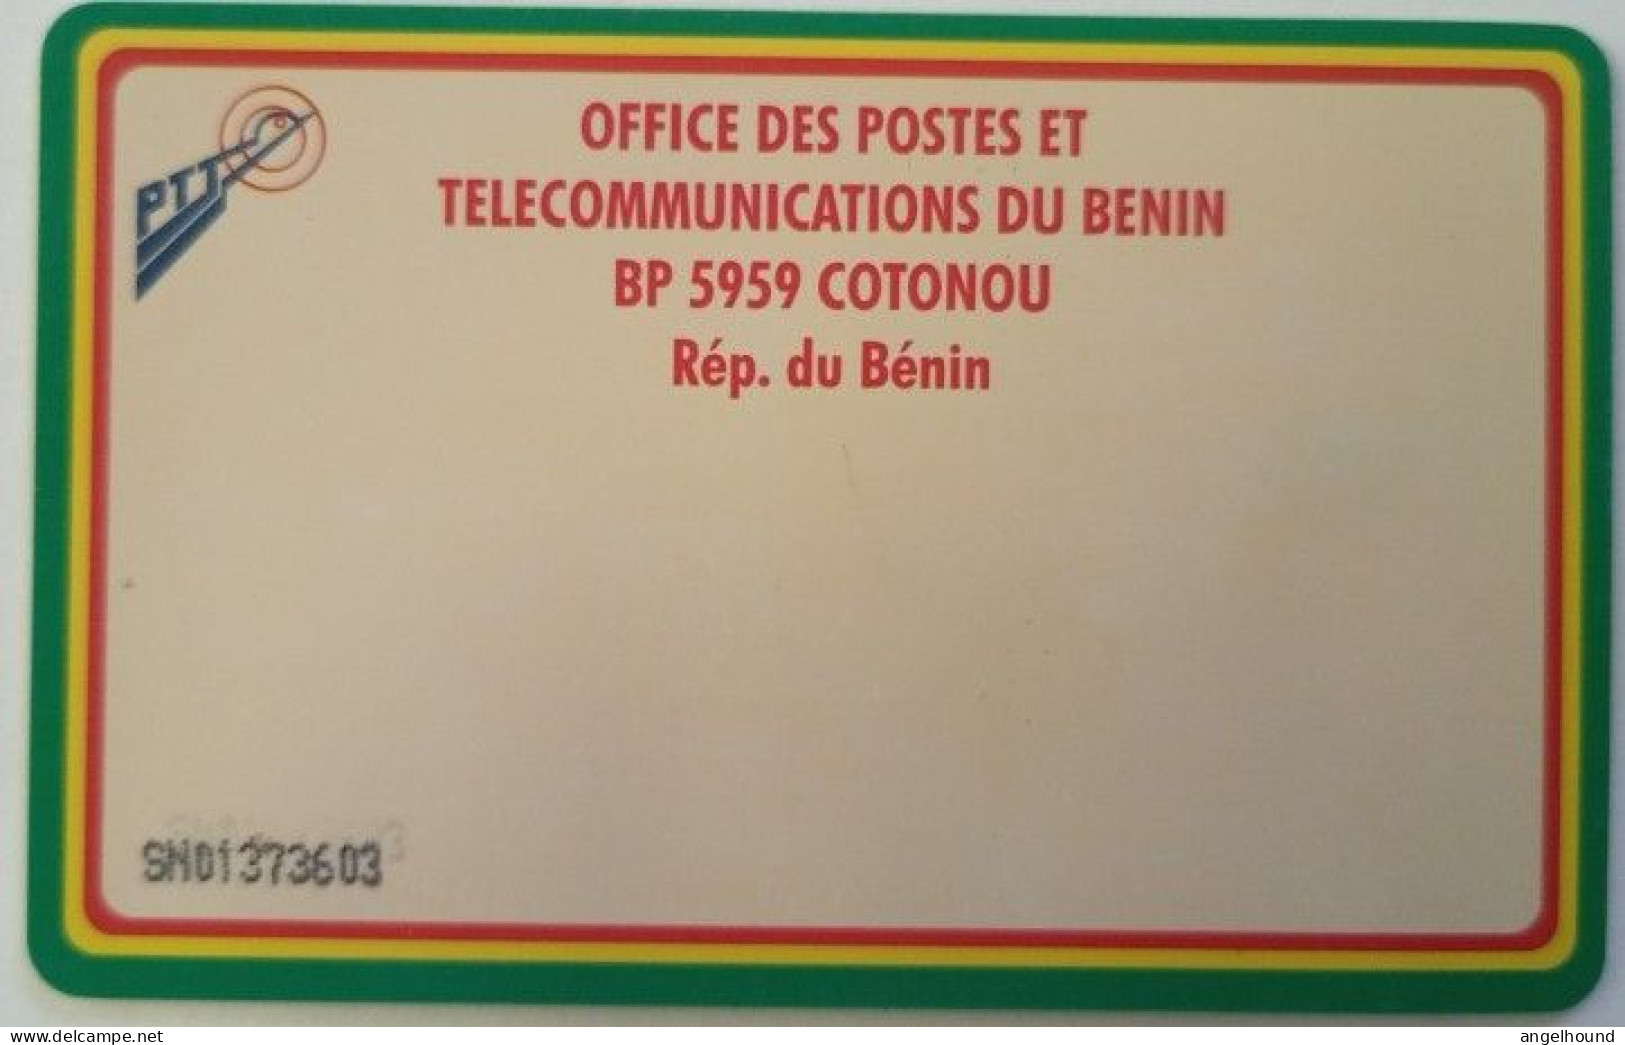 Conference A Trois 50 Units - Benin